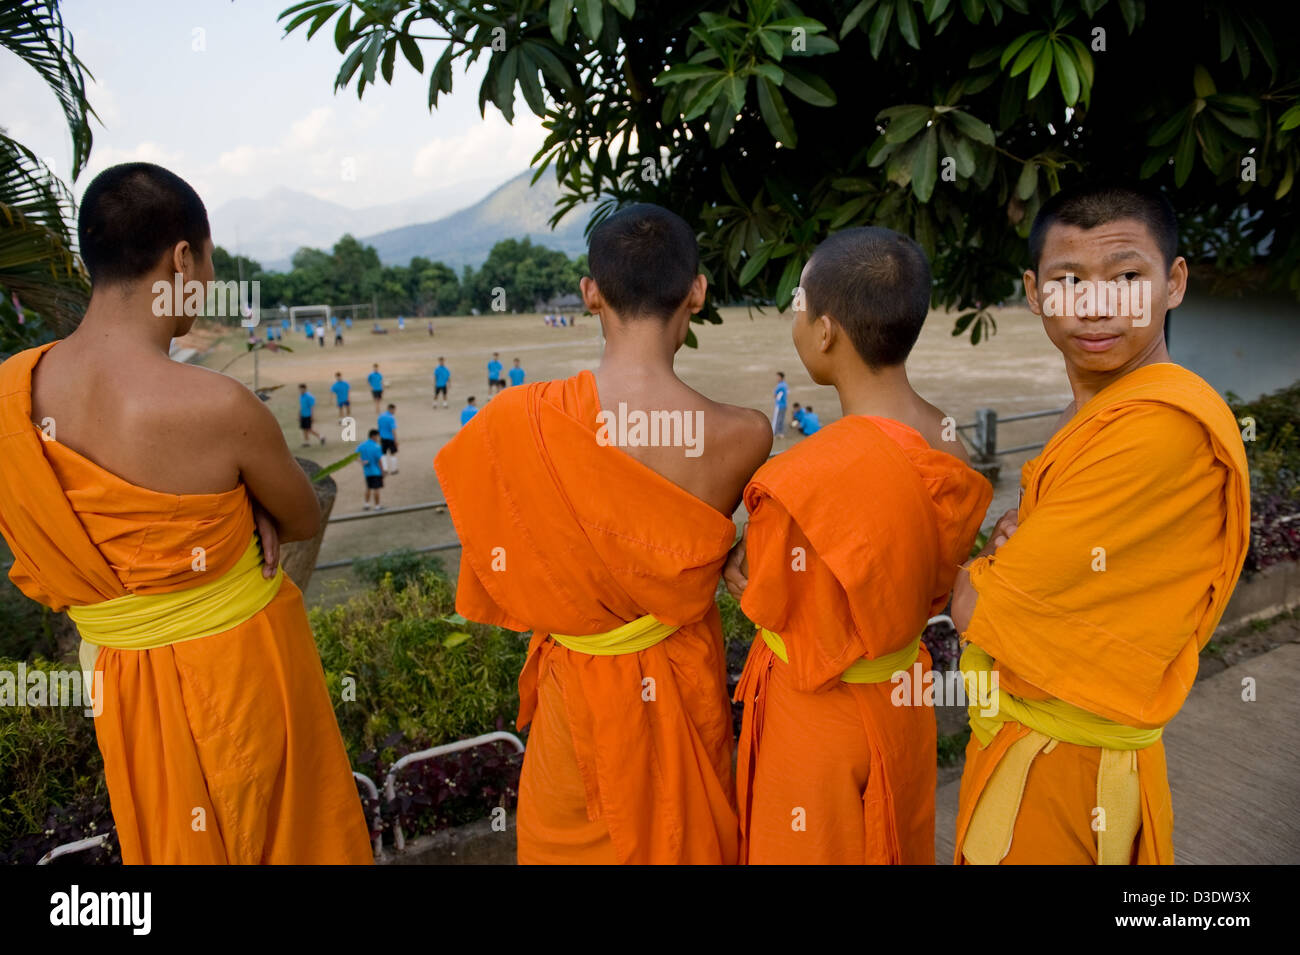 Fang, Tailandia, novicios mirar un partido de fútbol Foto de stock